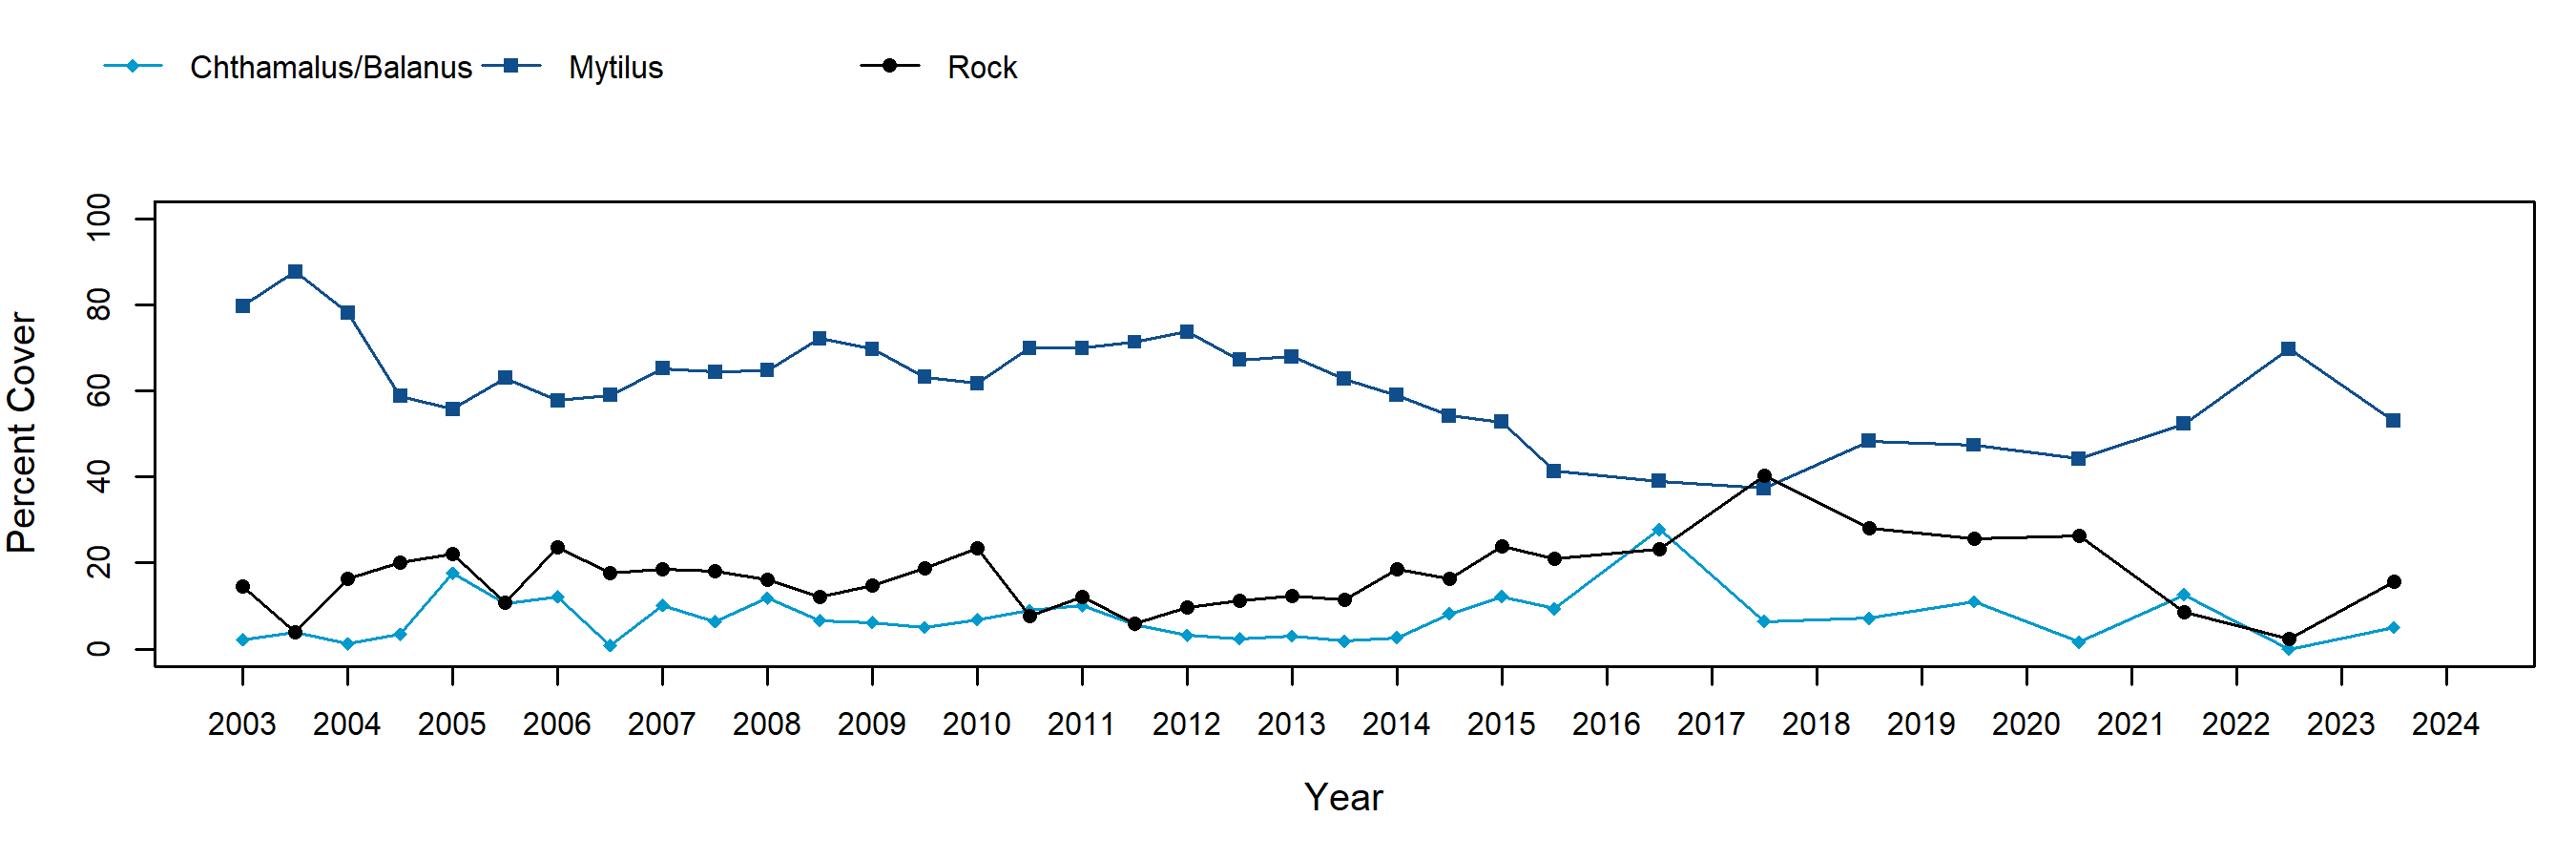 Coal Oil Point Mytilus trend plot